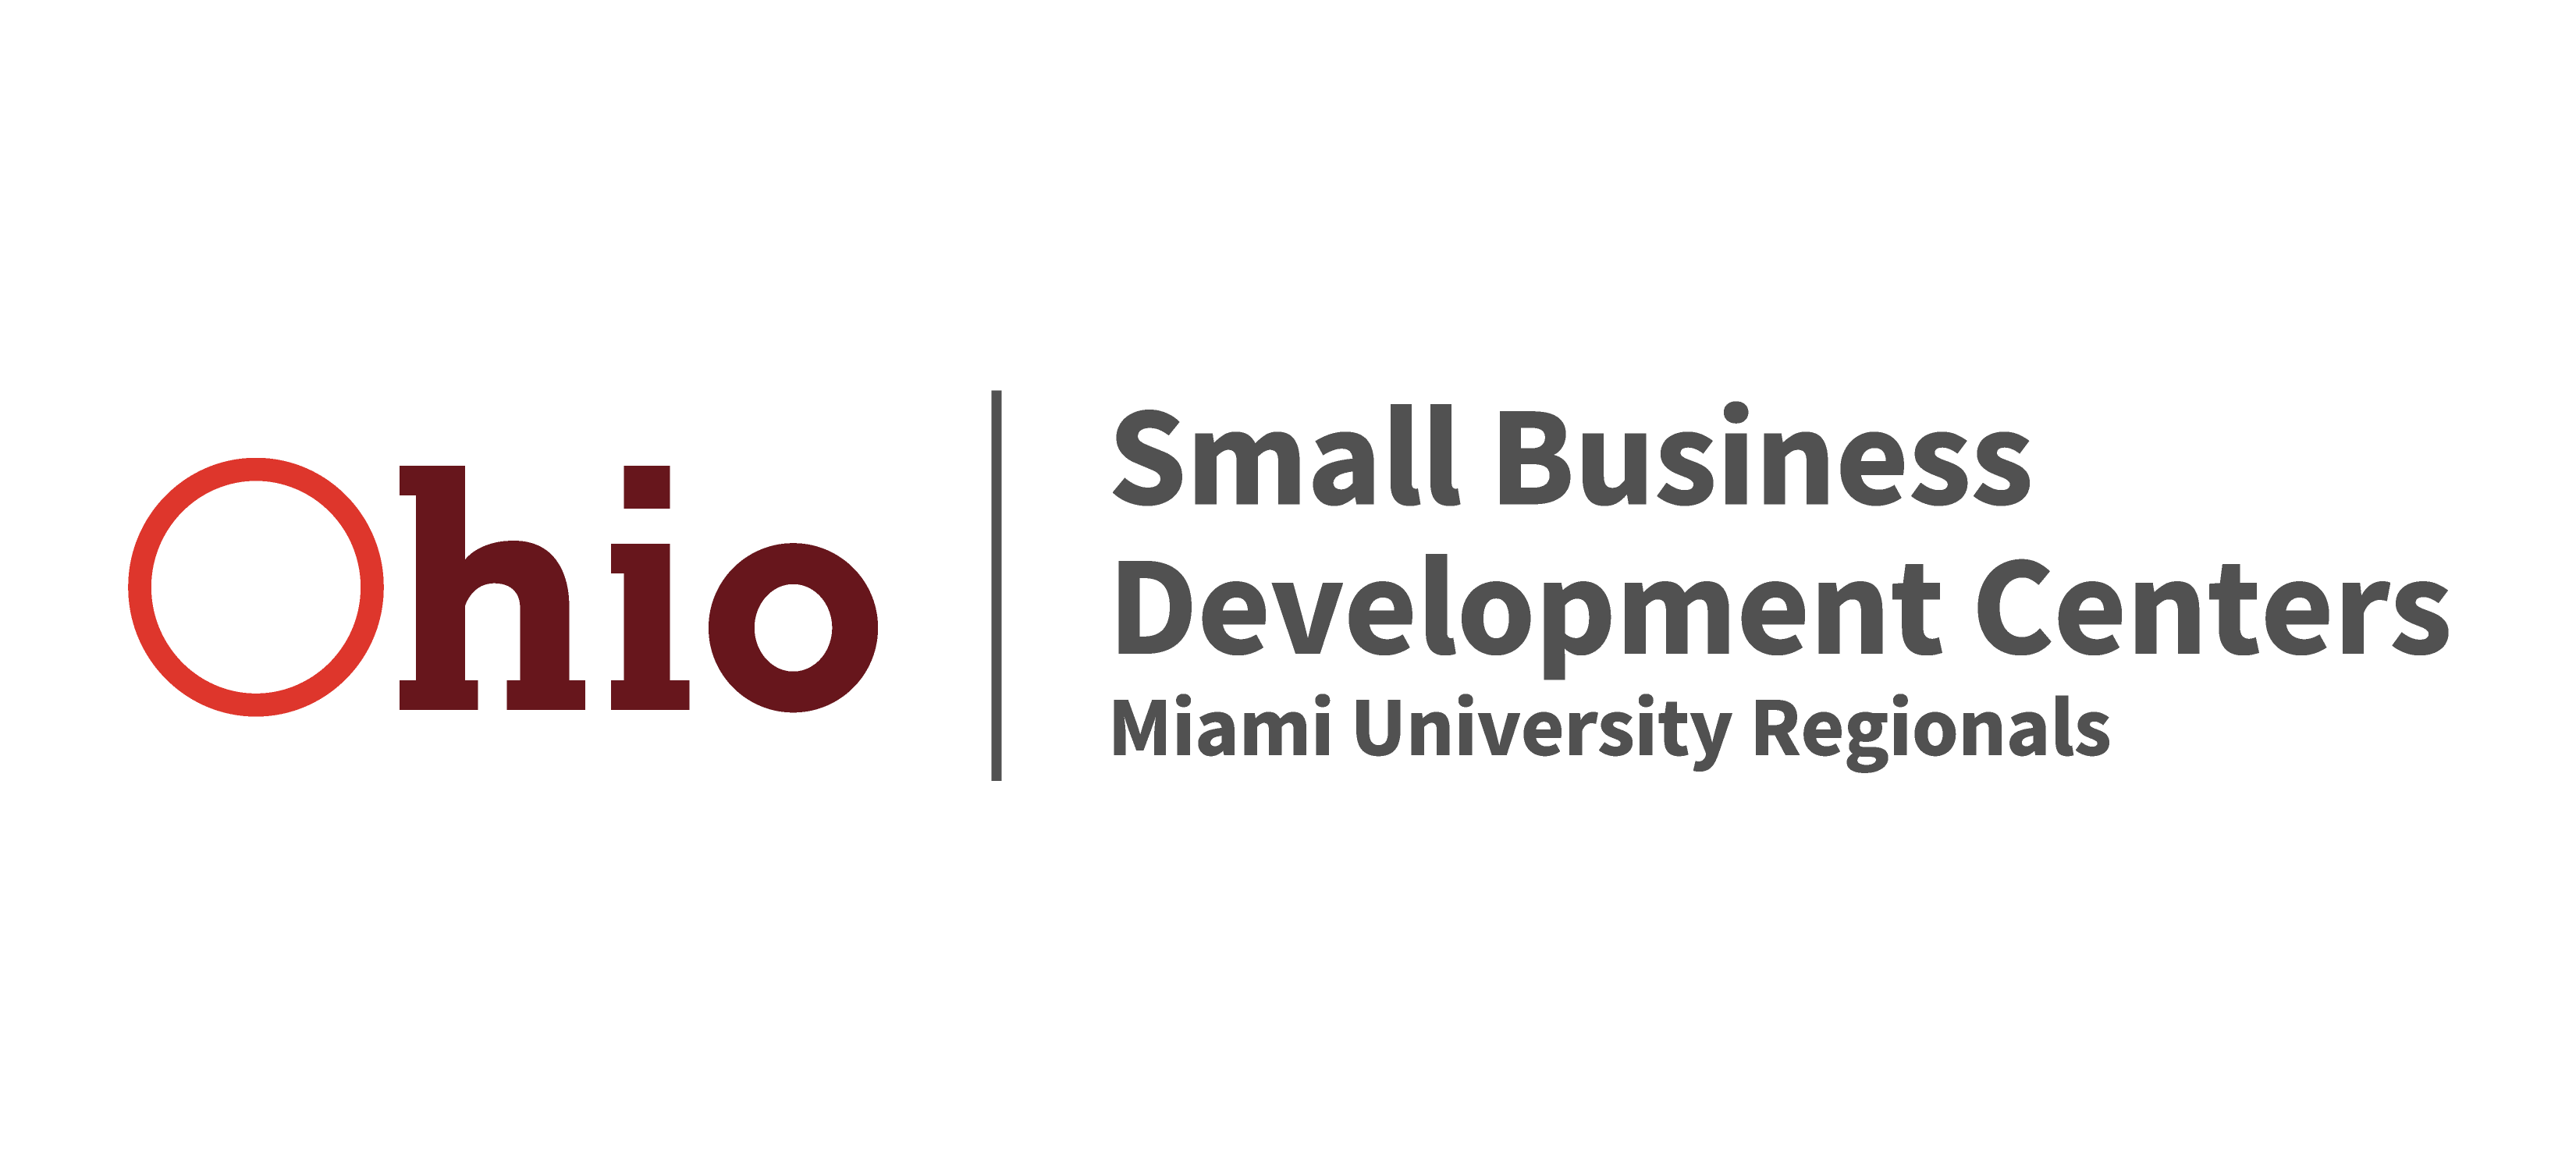 Ohio Small Business Development Centers Miami University Regionals Logo